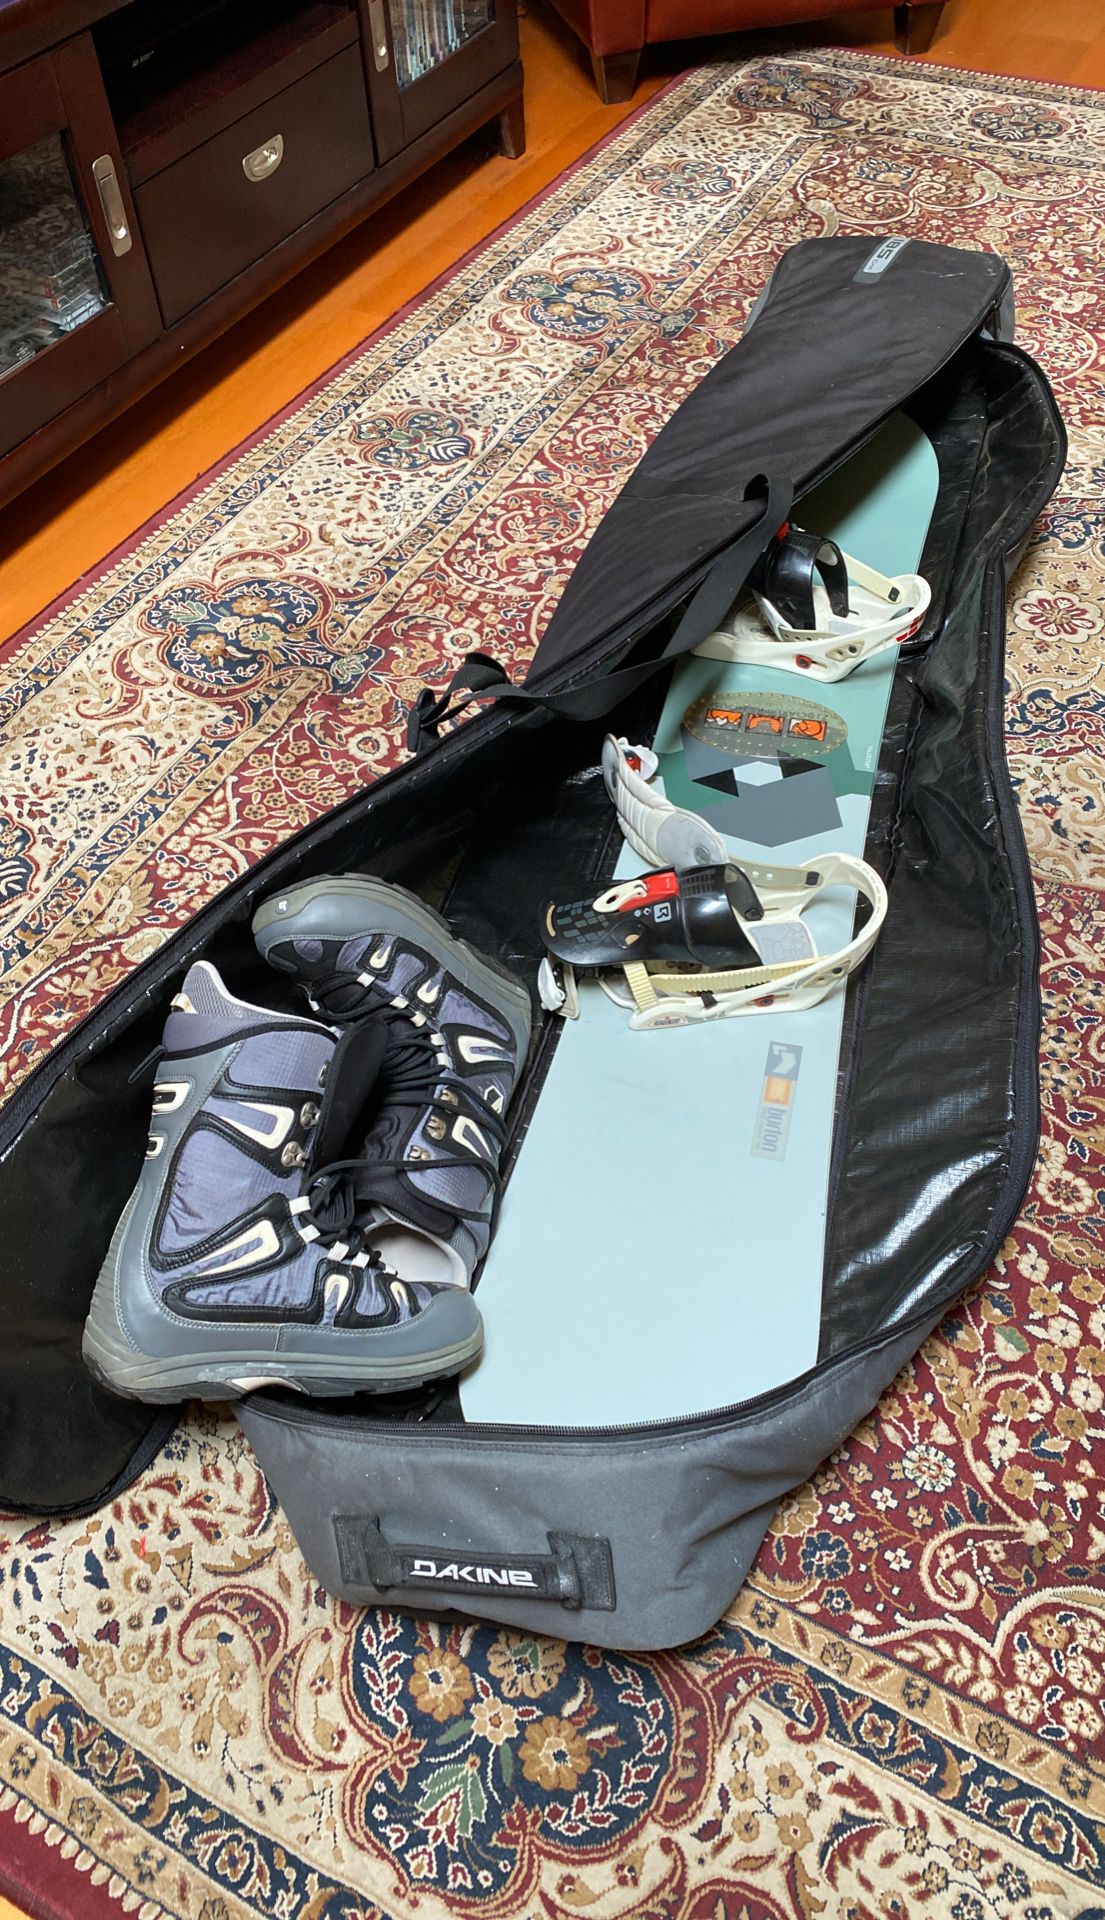 Burton Snowboard 162 Classic, Size 10 Boots and Dakine bag